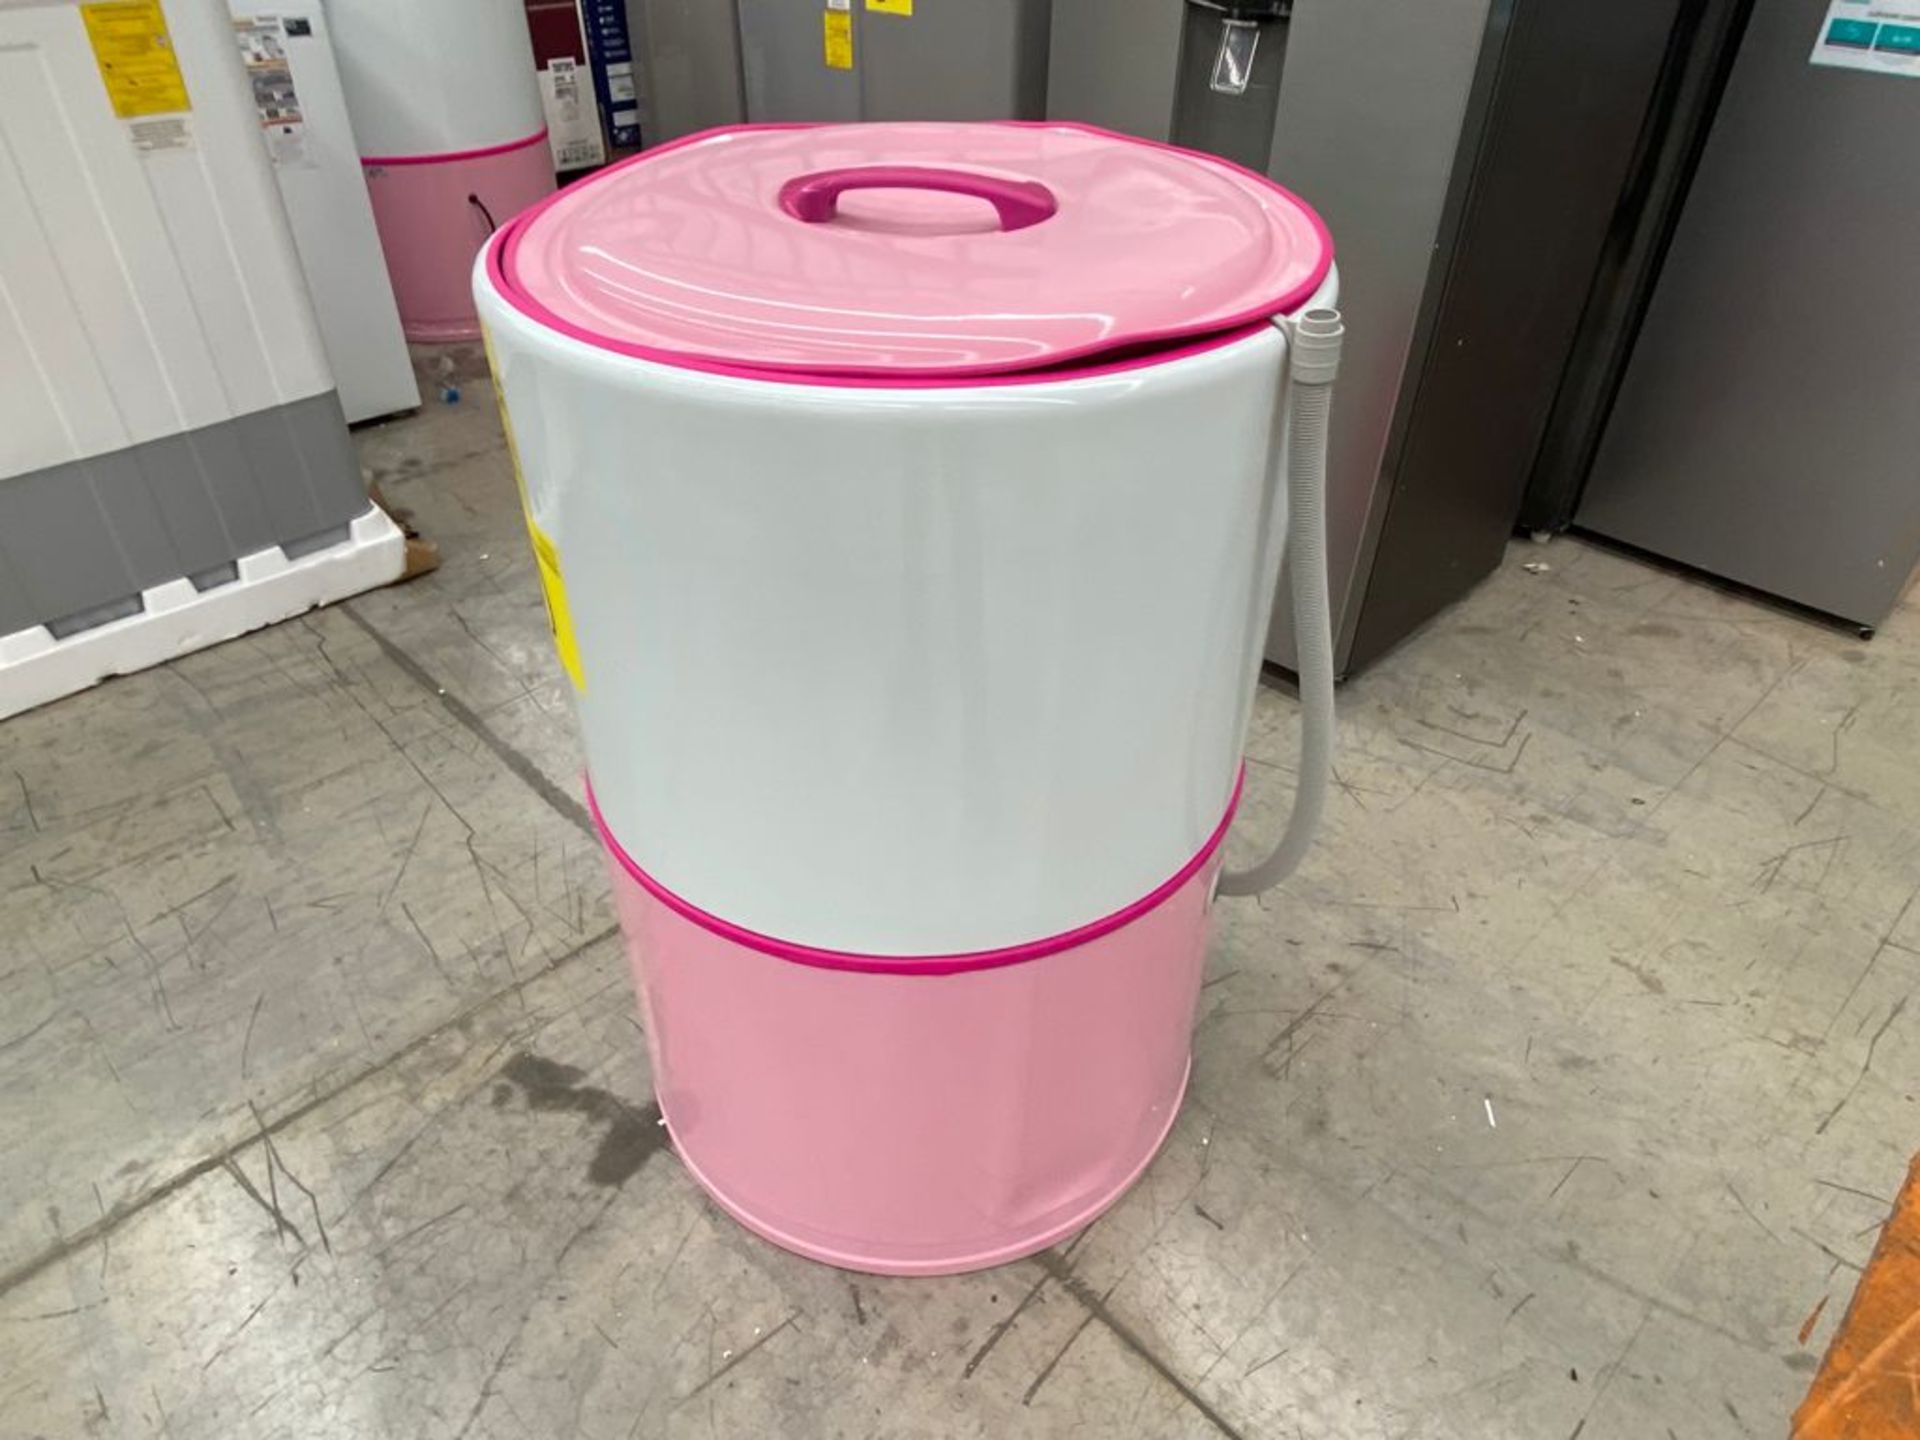 1 Lavadora marca Koblenz de 22 kilos color rosa modelo LRK-2211A - Image 10 of 17